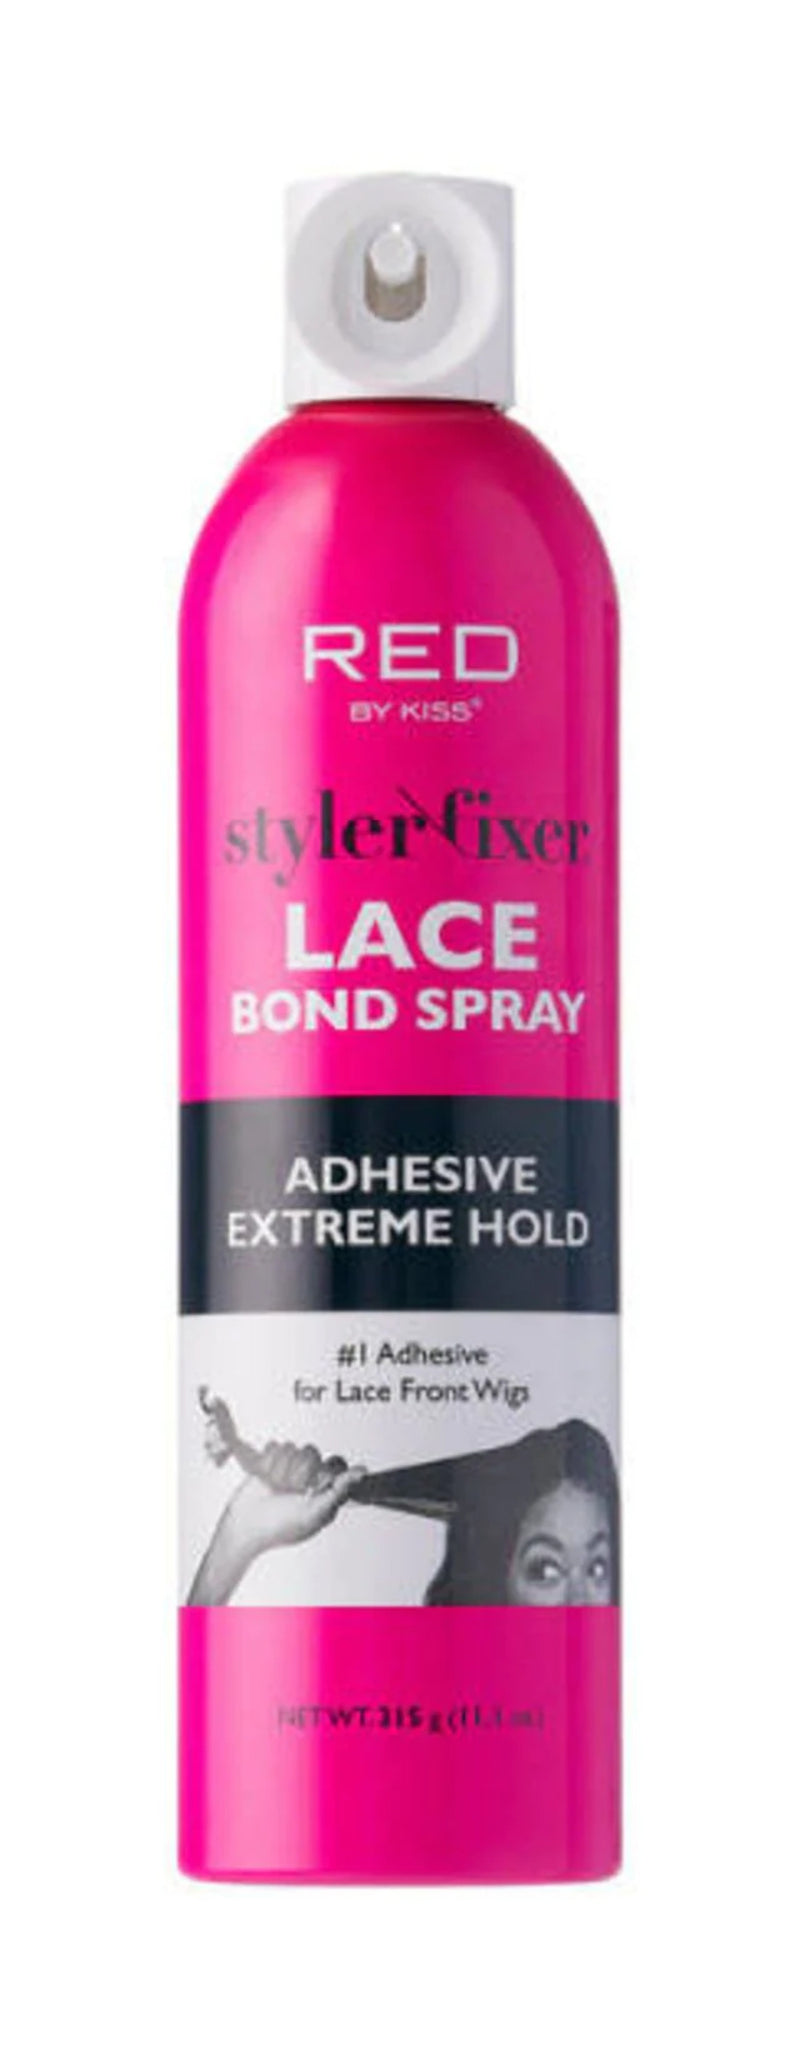 Style Fixer Lace Bond Spray Ashesive Extreme Hold 11.1 oz